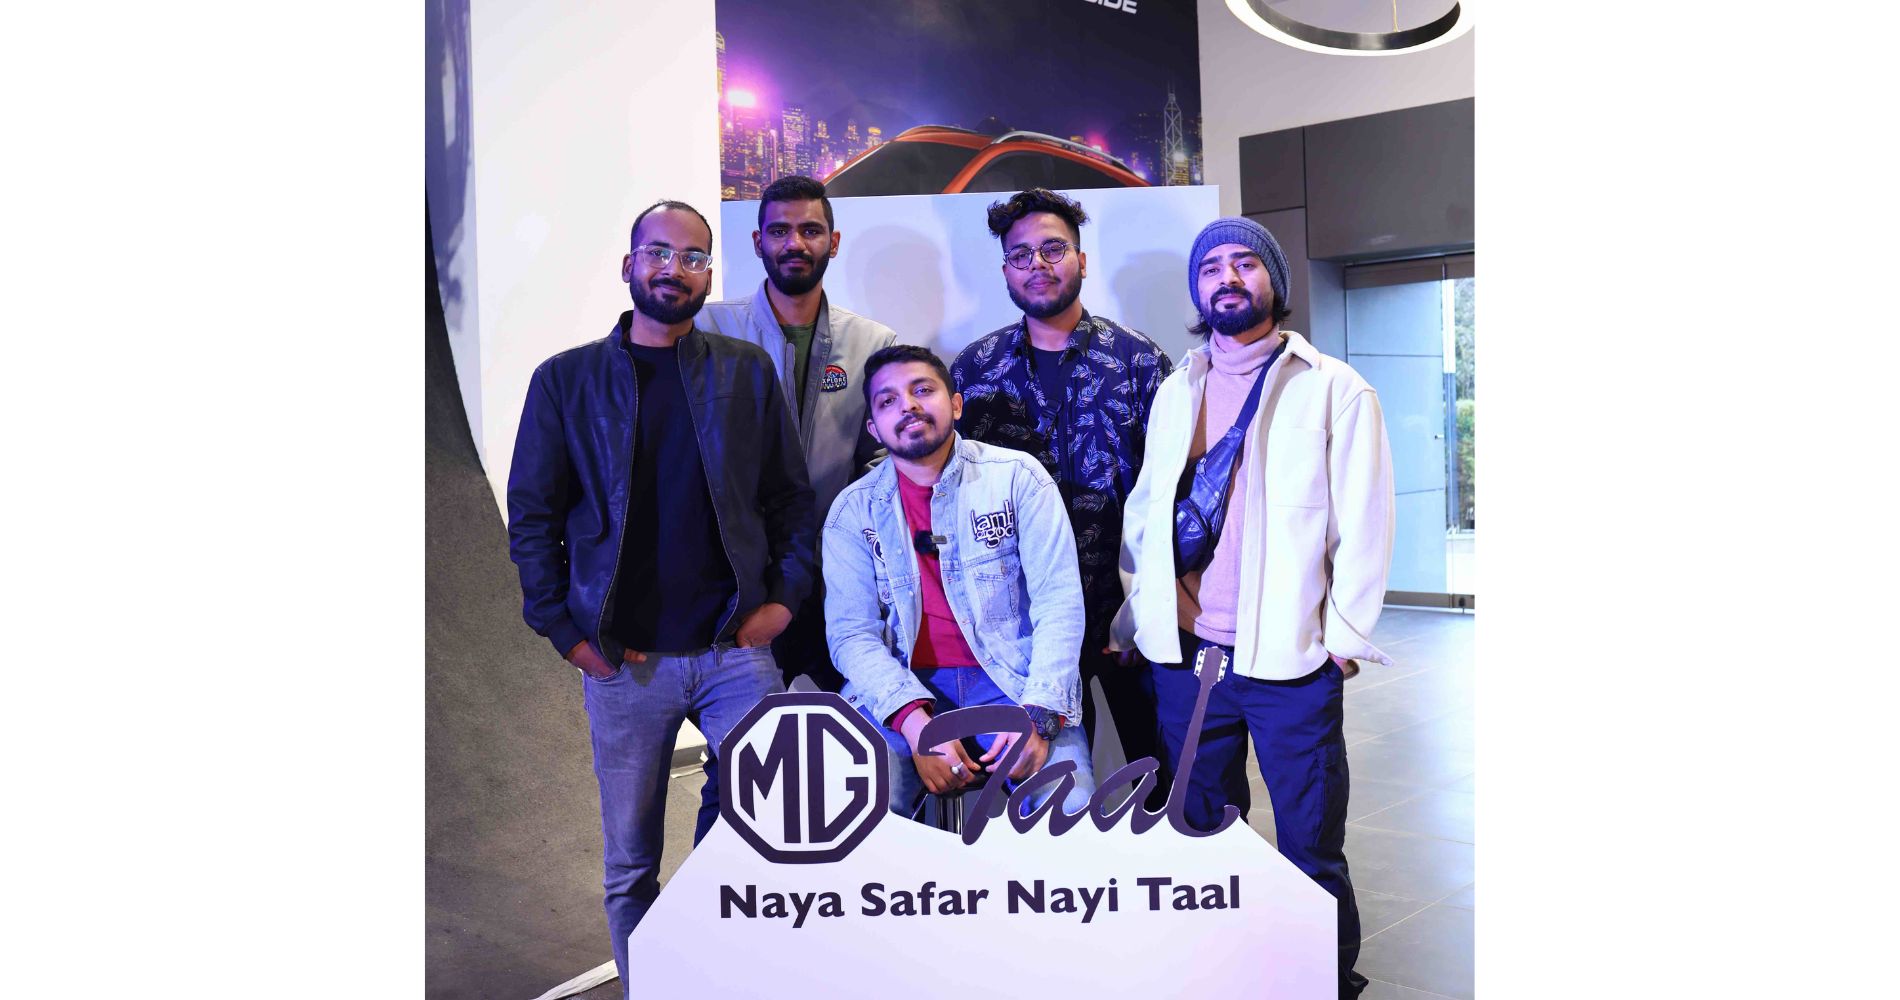 MG Motor India Presents 'NAINA': A Revolutionary Collaboration Unlocking The Power Of Art And Music